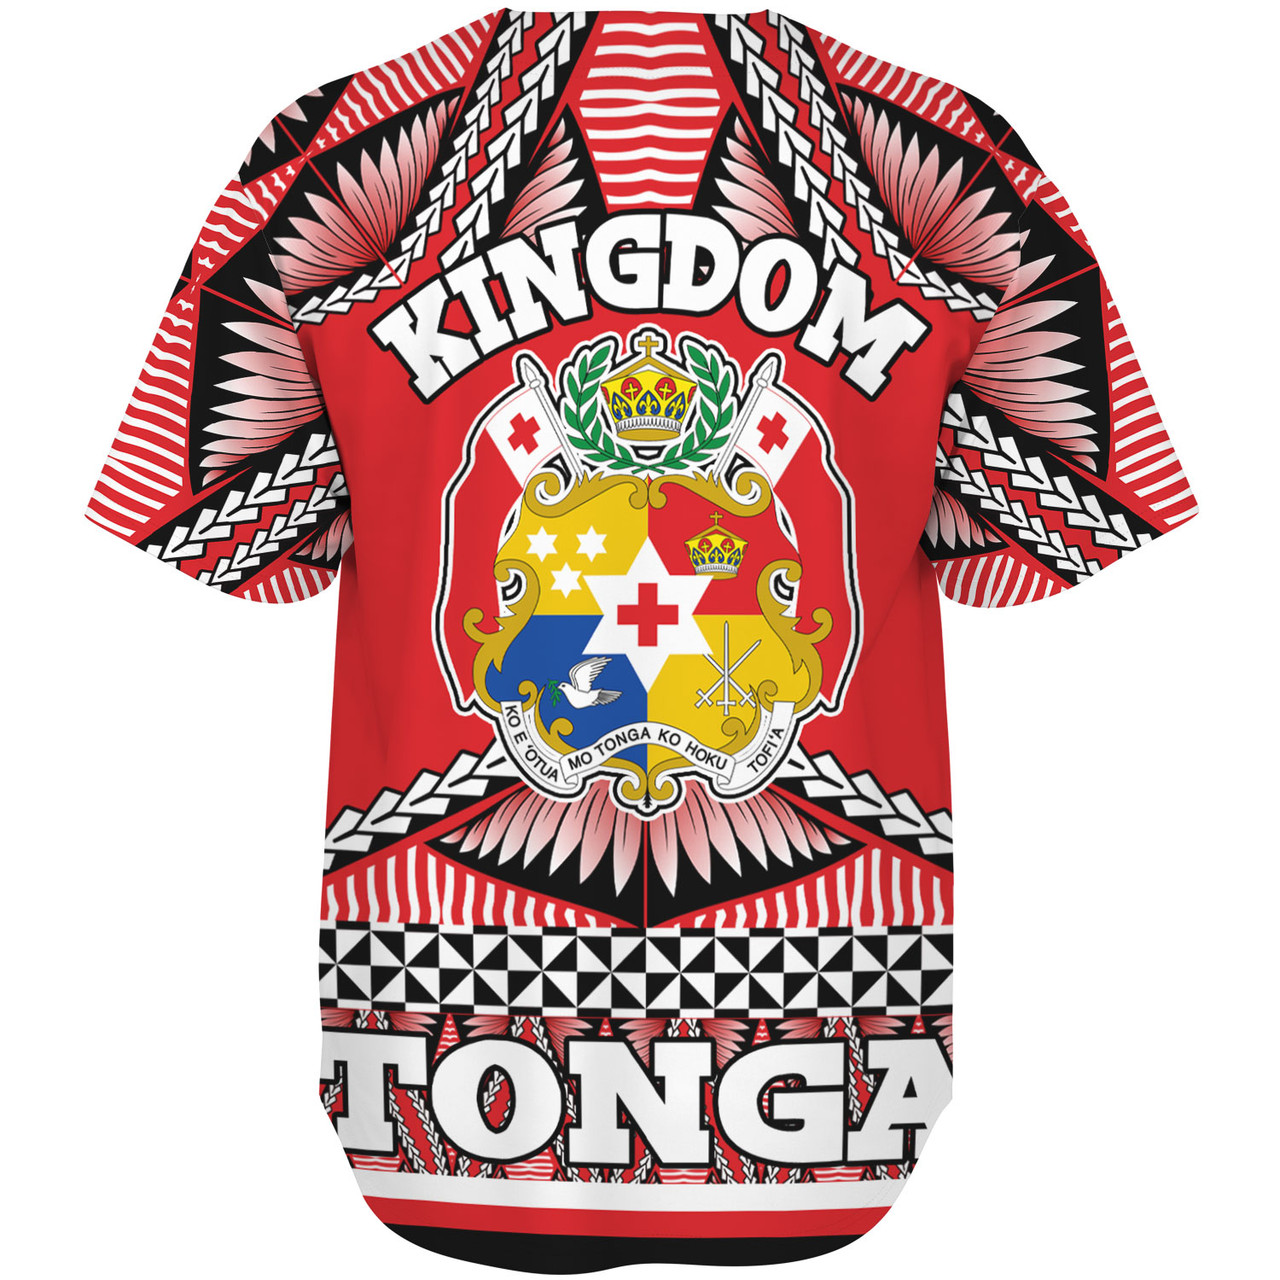 Tonga Baseball Shirt  Tonga Kingdom Tongan Ngatu Style